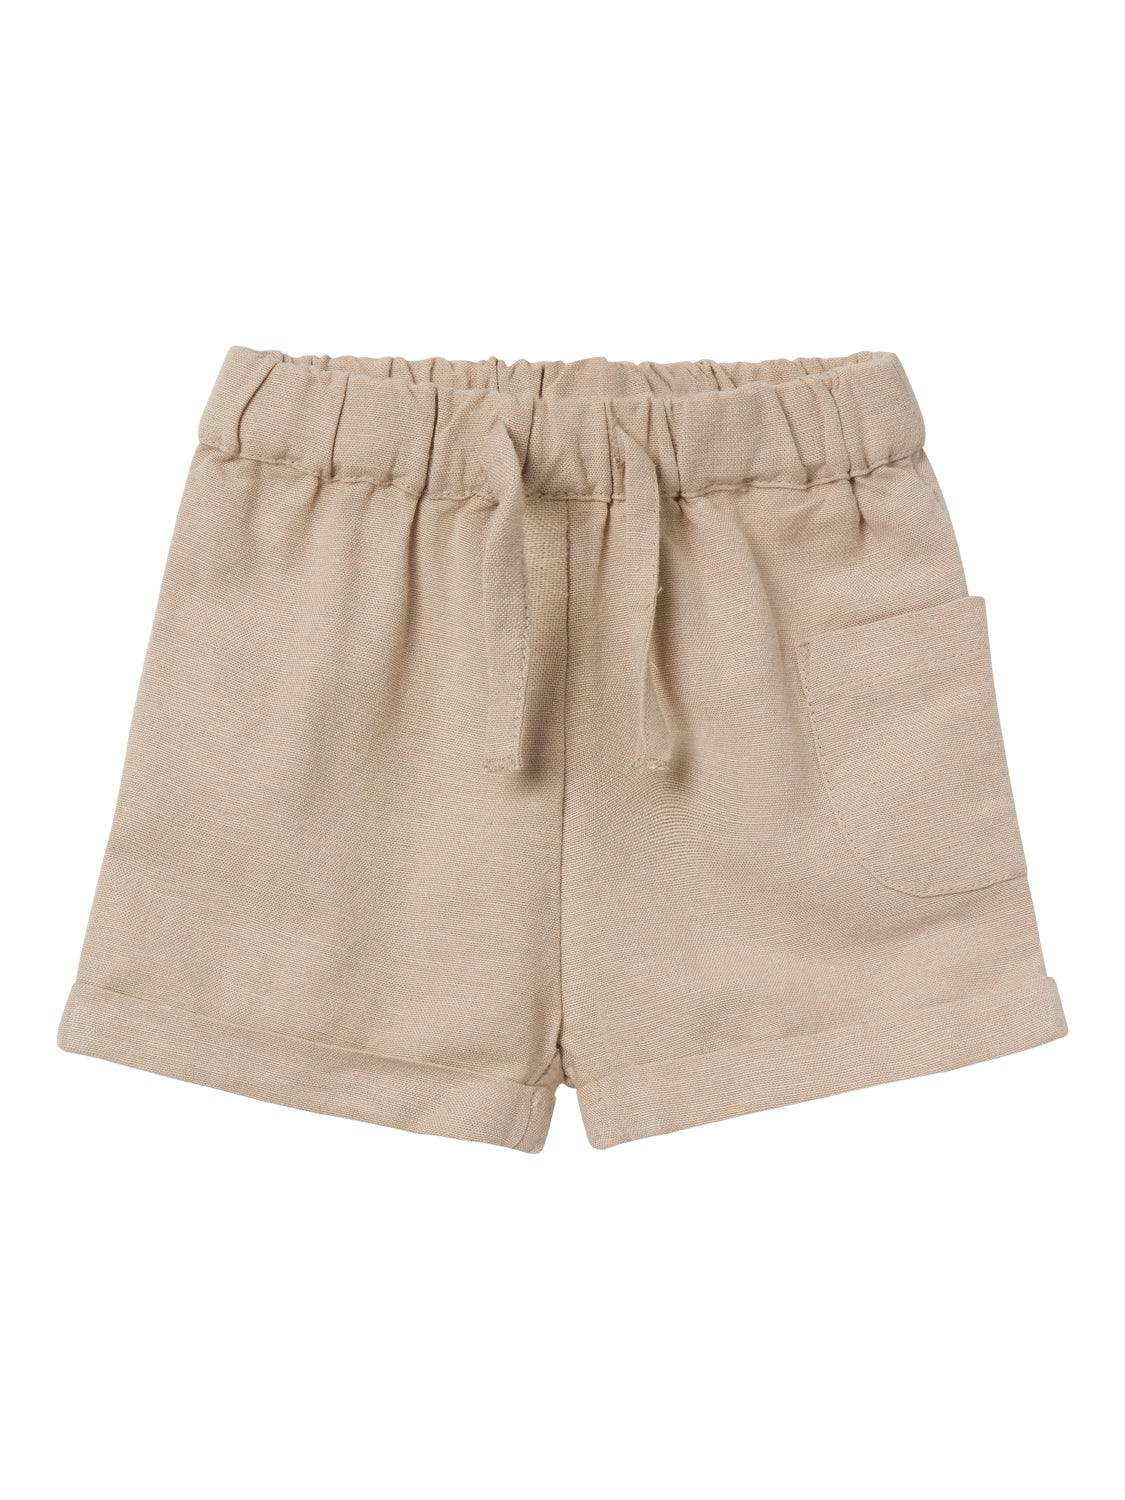 Name it - Faher shorts - Humus